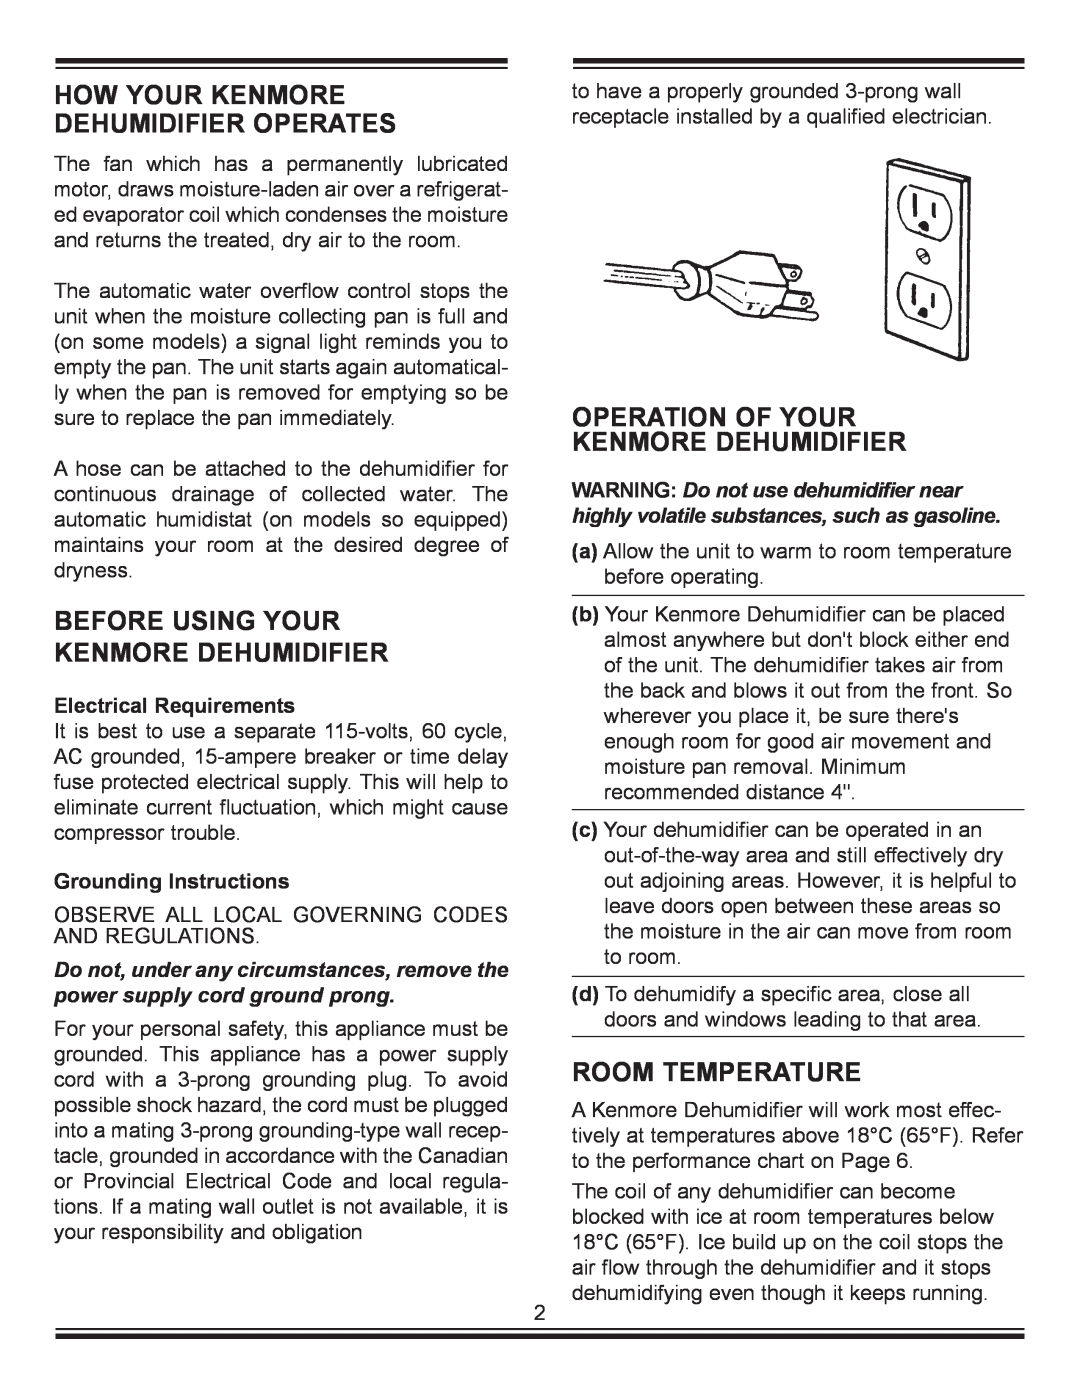 Kenmore C675-25010 manual How Your Kenmore Dehumidifier Operates, Before Using Your Kenmore Dehumidifier, Room Temperature 